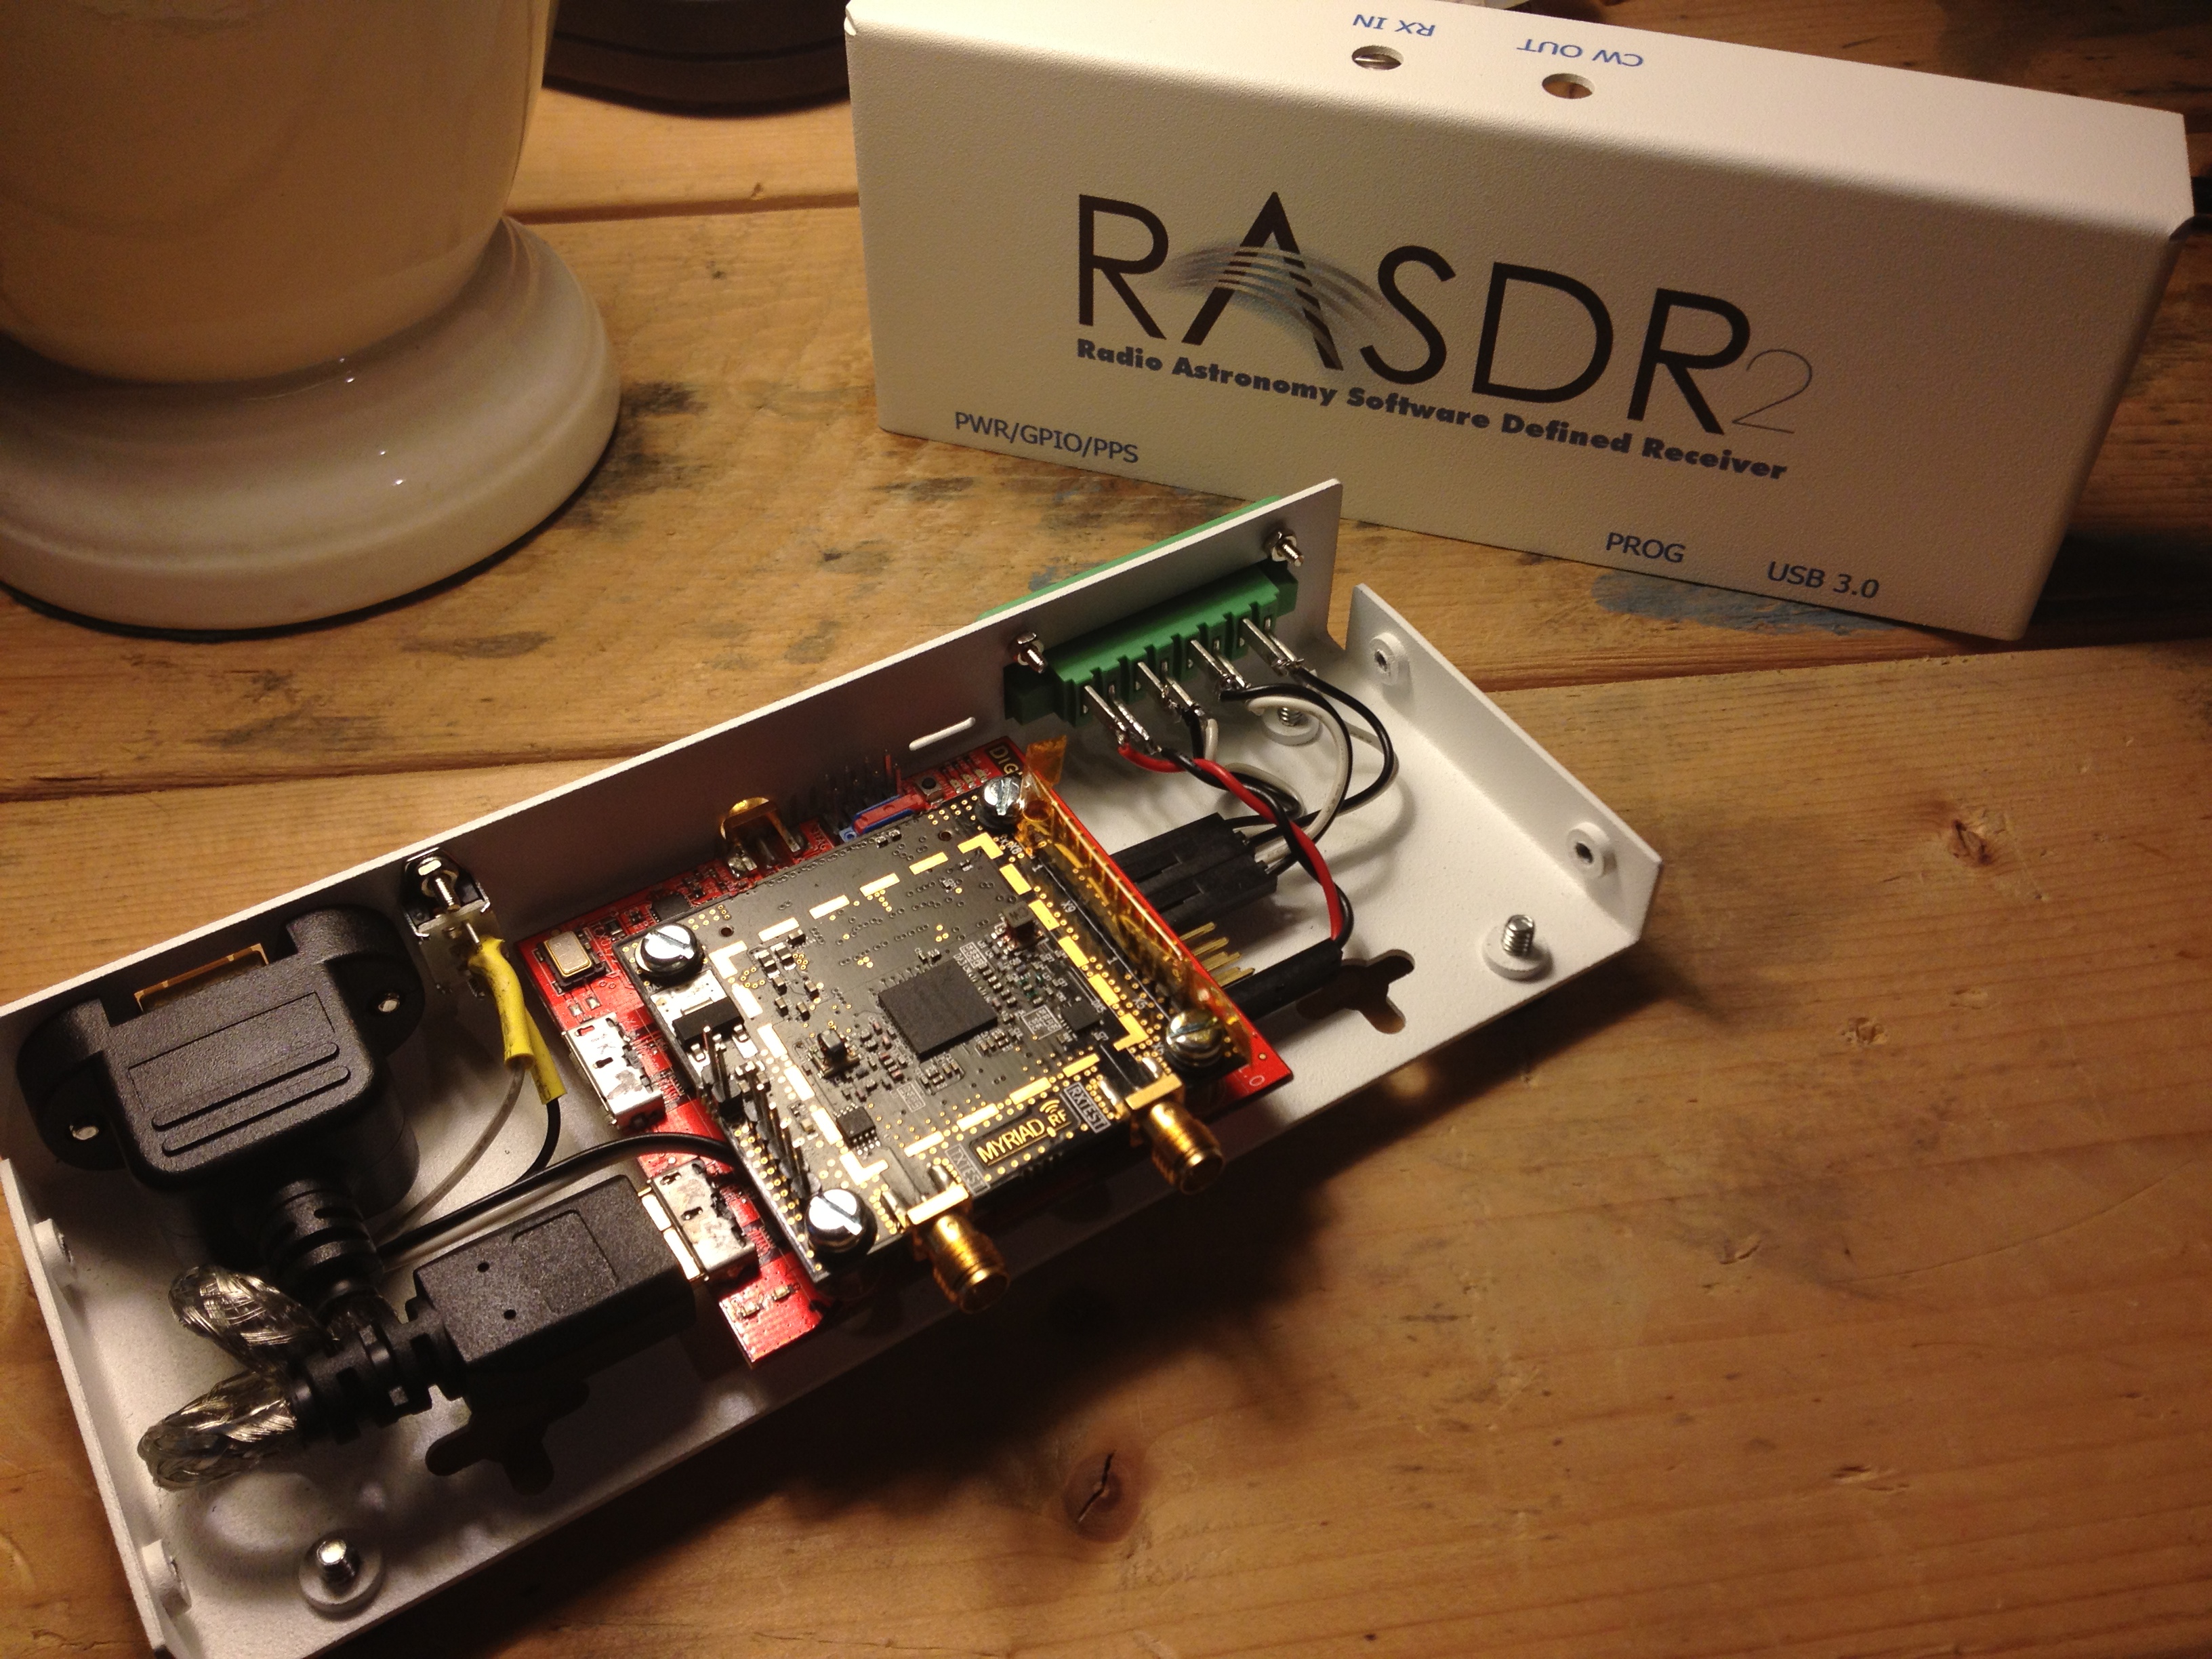 RASDR2 Case Inside